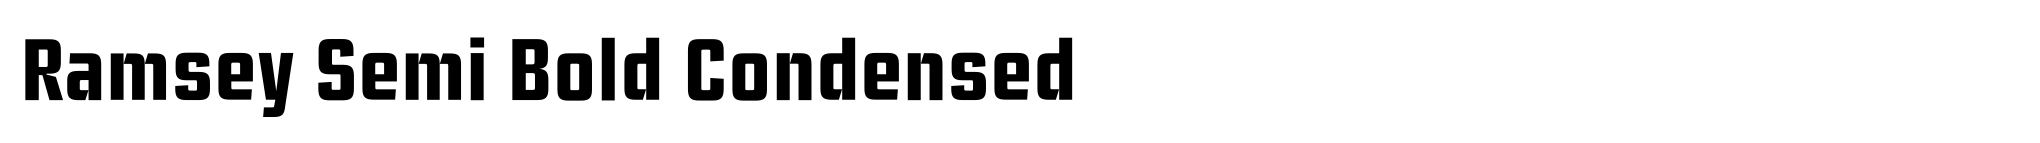 Ramsey Semi Bold Condensed image